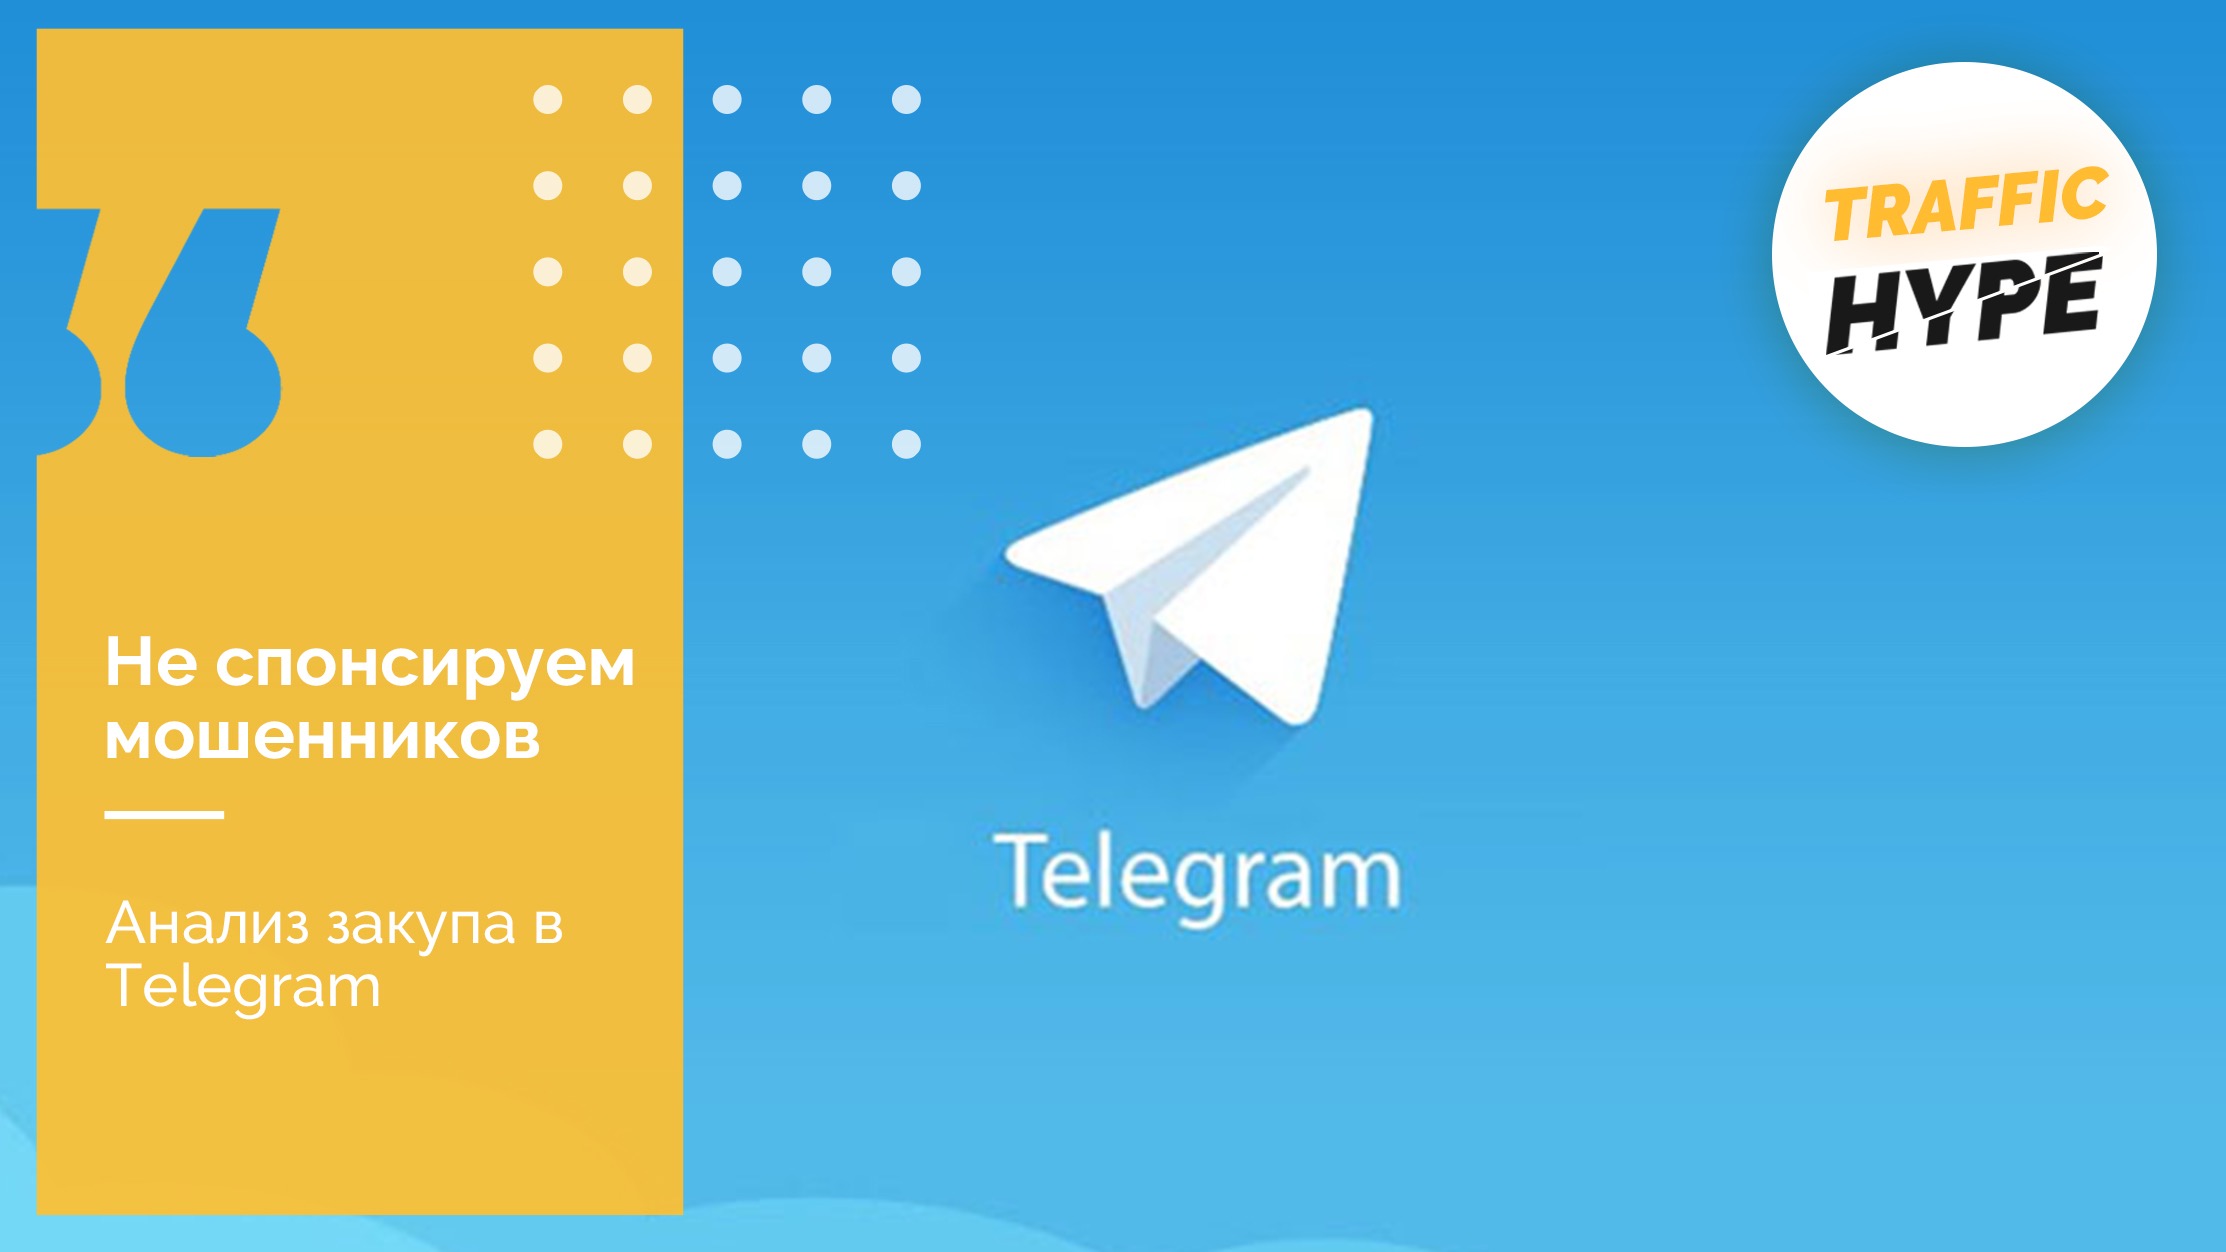 Telegram channel s. Реклама телеграм канала. Рекламный канал в телеграмме. Реклама канала в телегрпам. Рекламный баннер телеграмма.